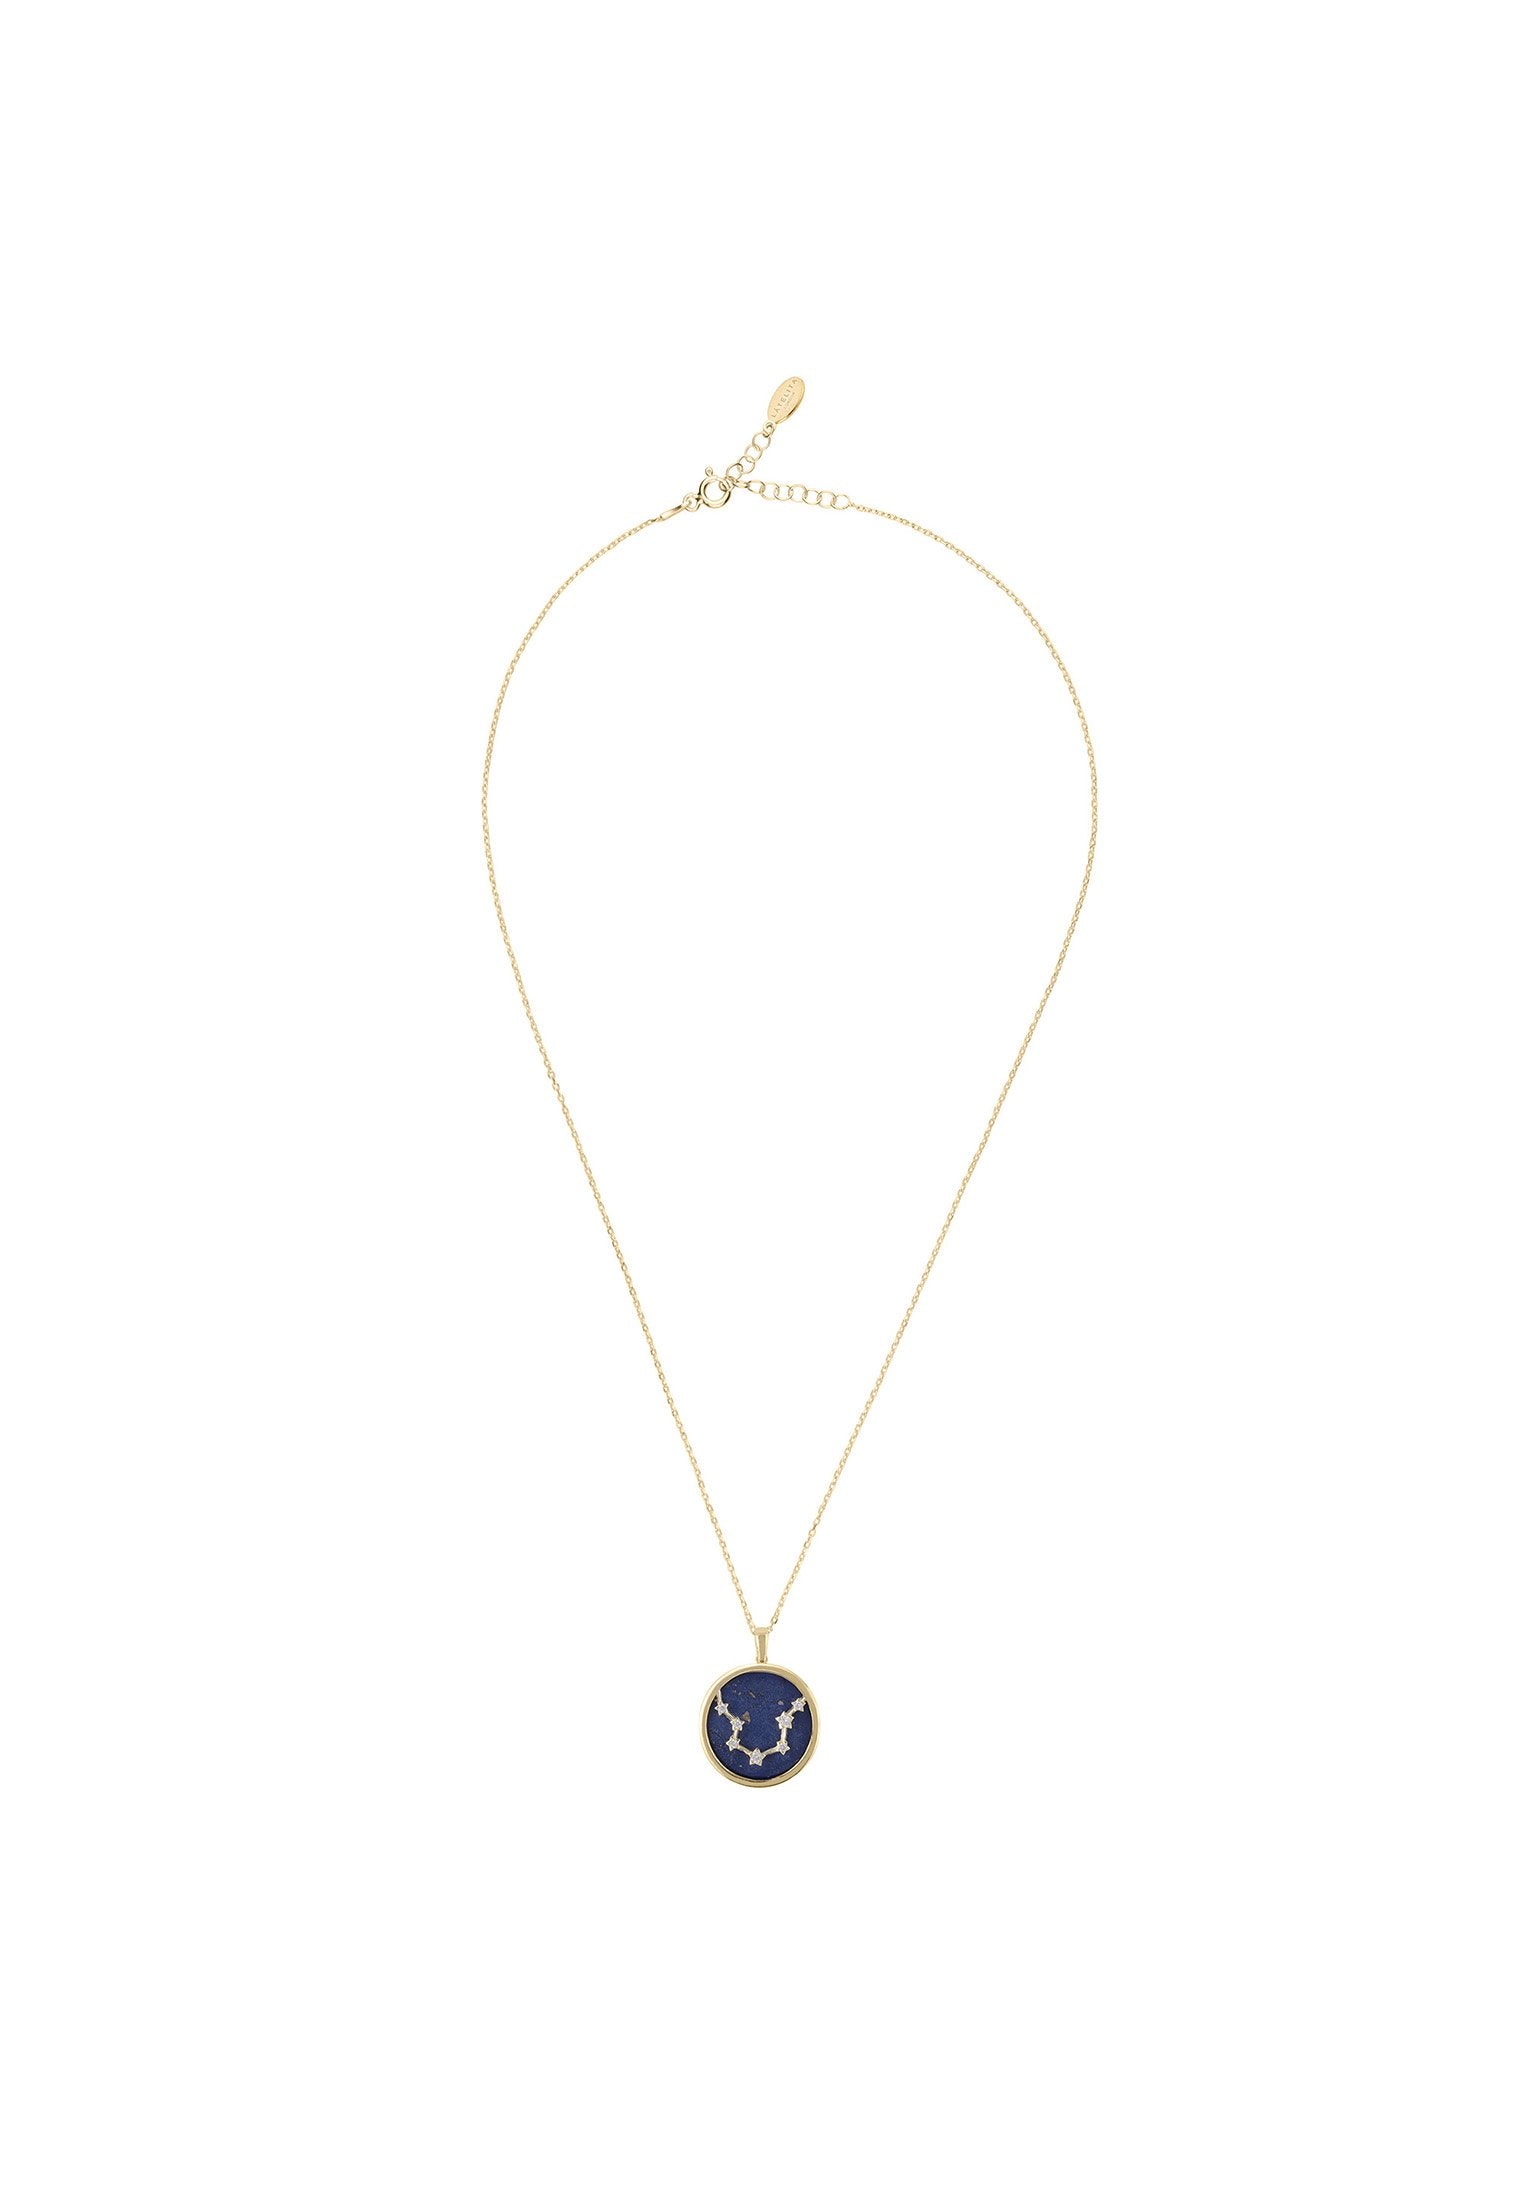 Personalized Necklaces - Zodiac Lapis Lazuli Gemstone Star Constellation Pendant Necklace Gold Aquarius 